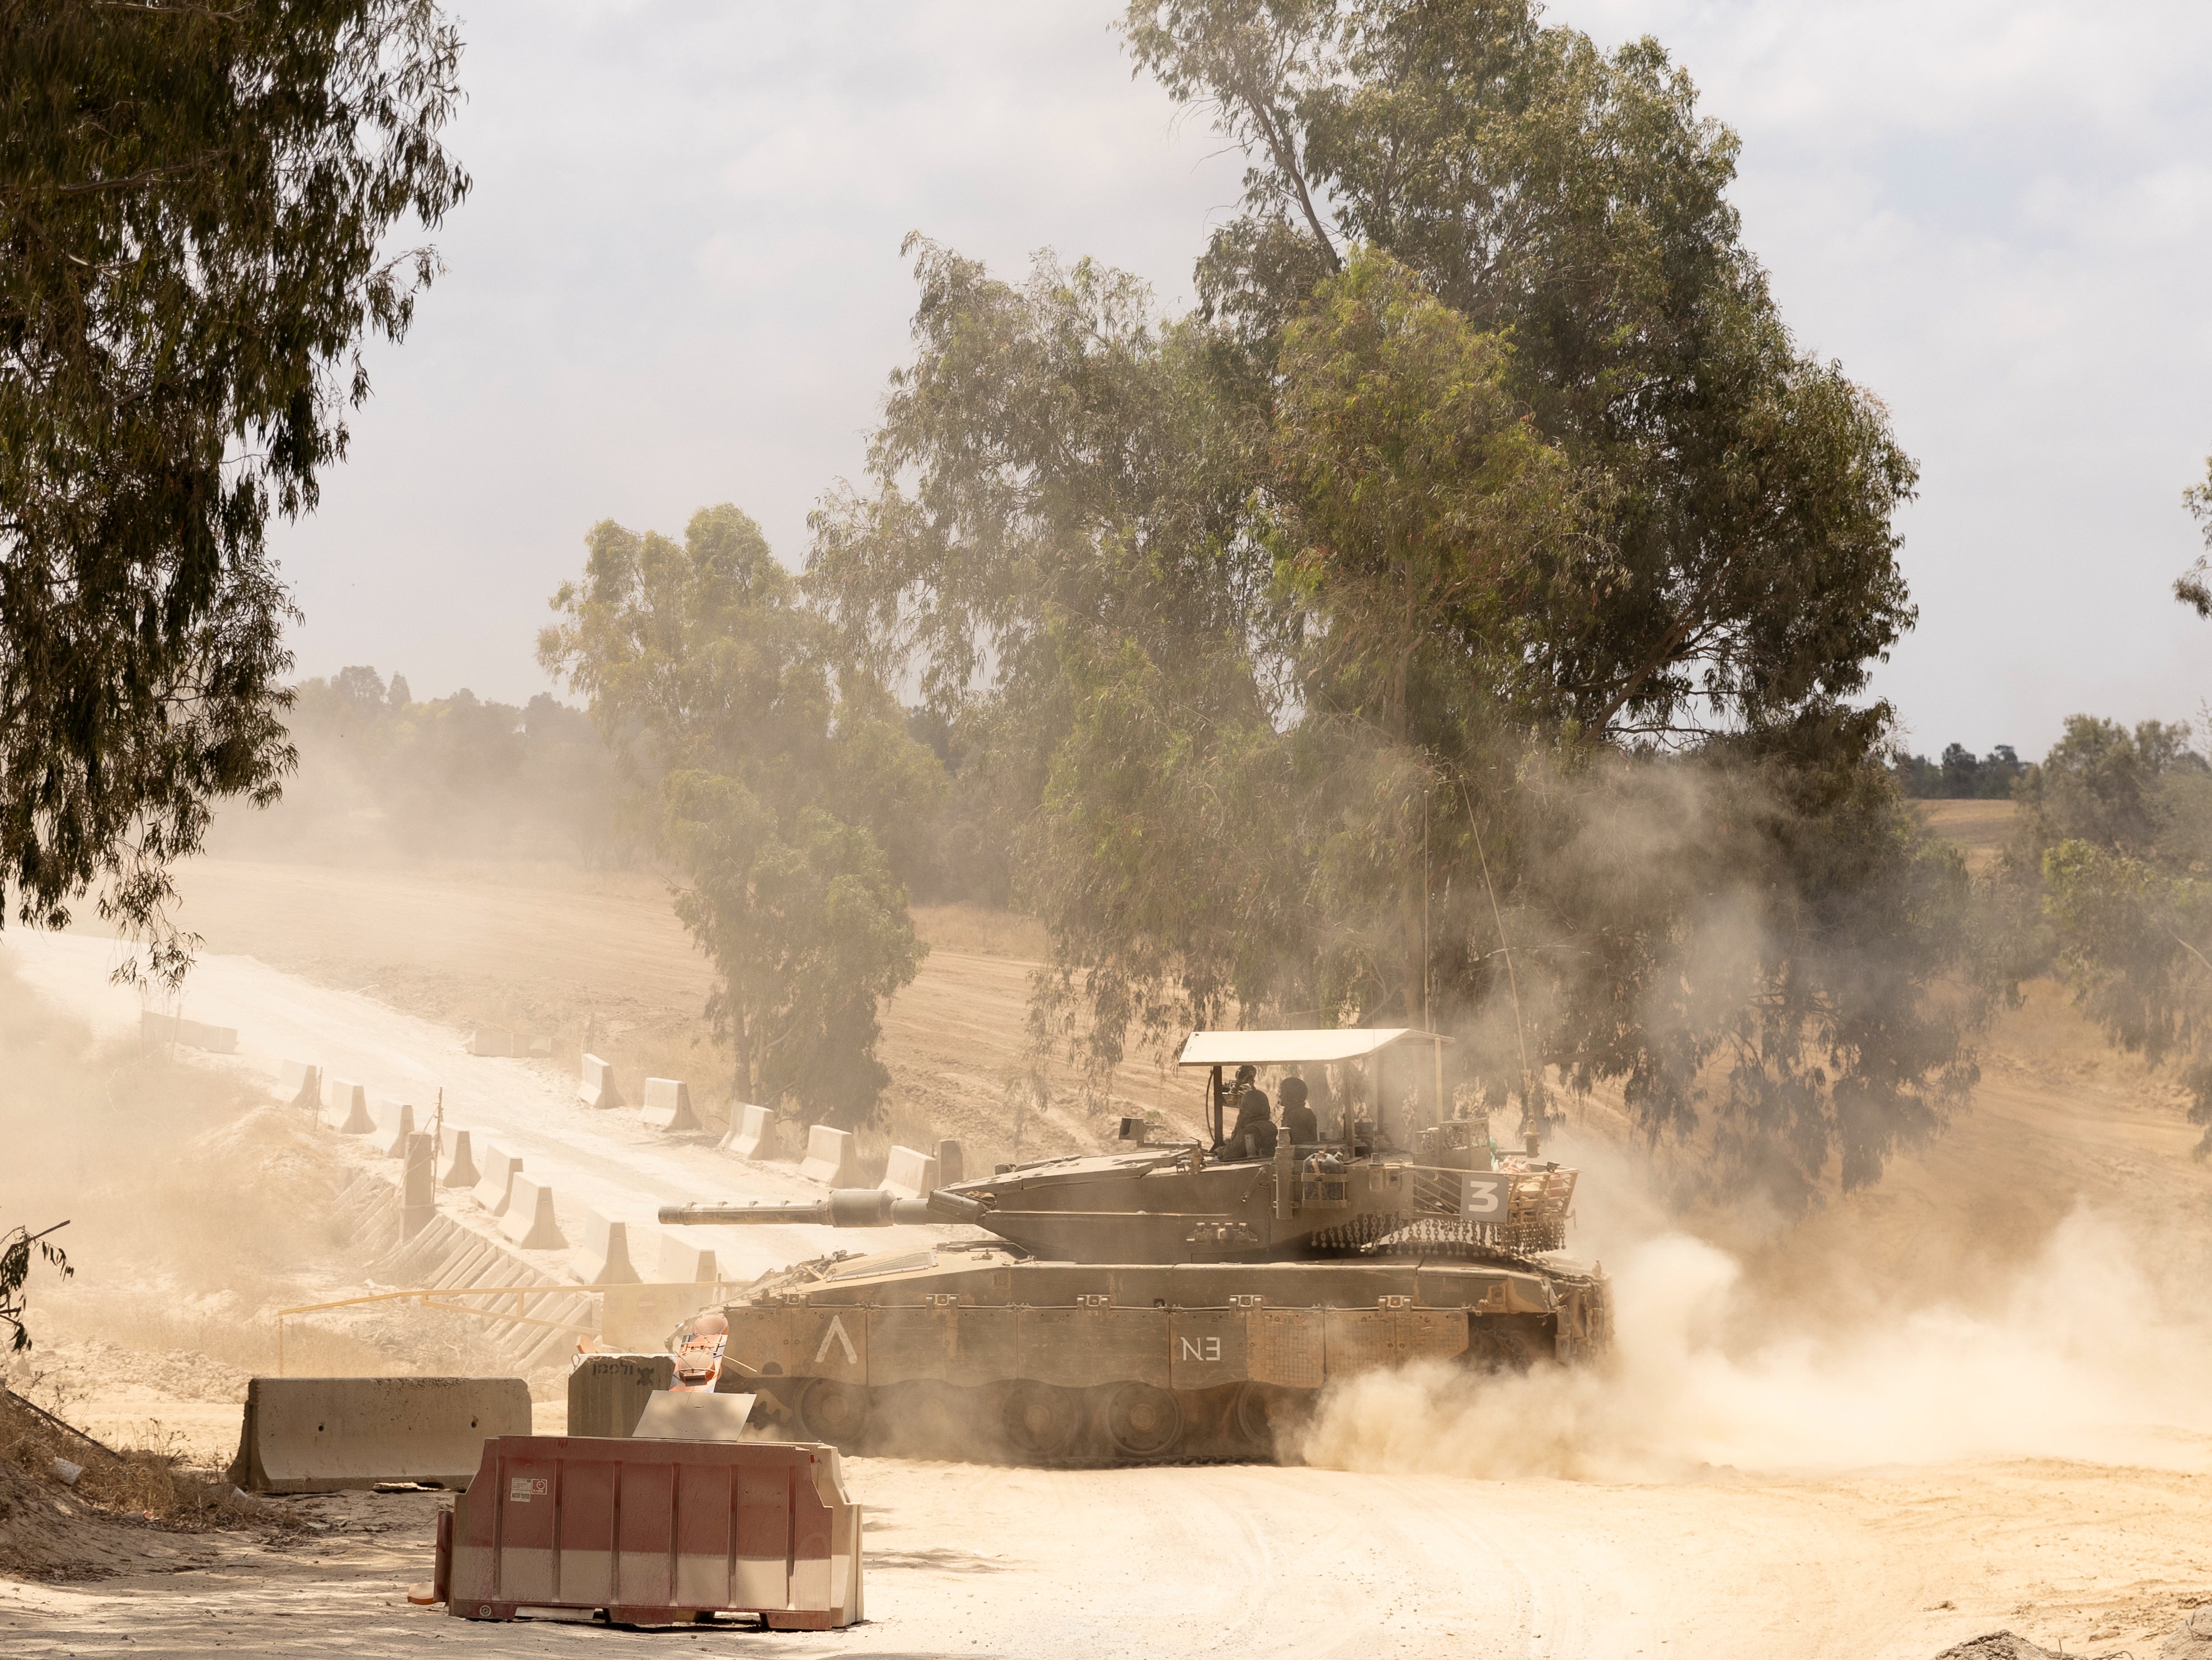 Israeli tanks pressed further into Rafah